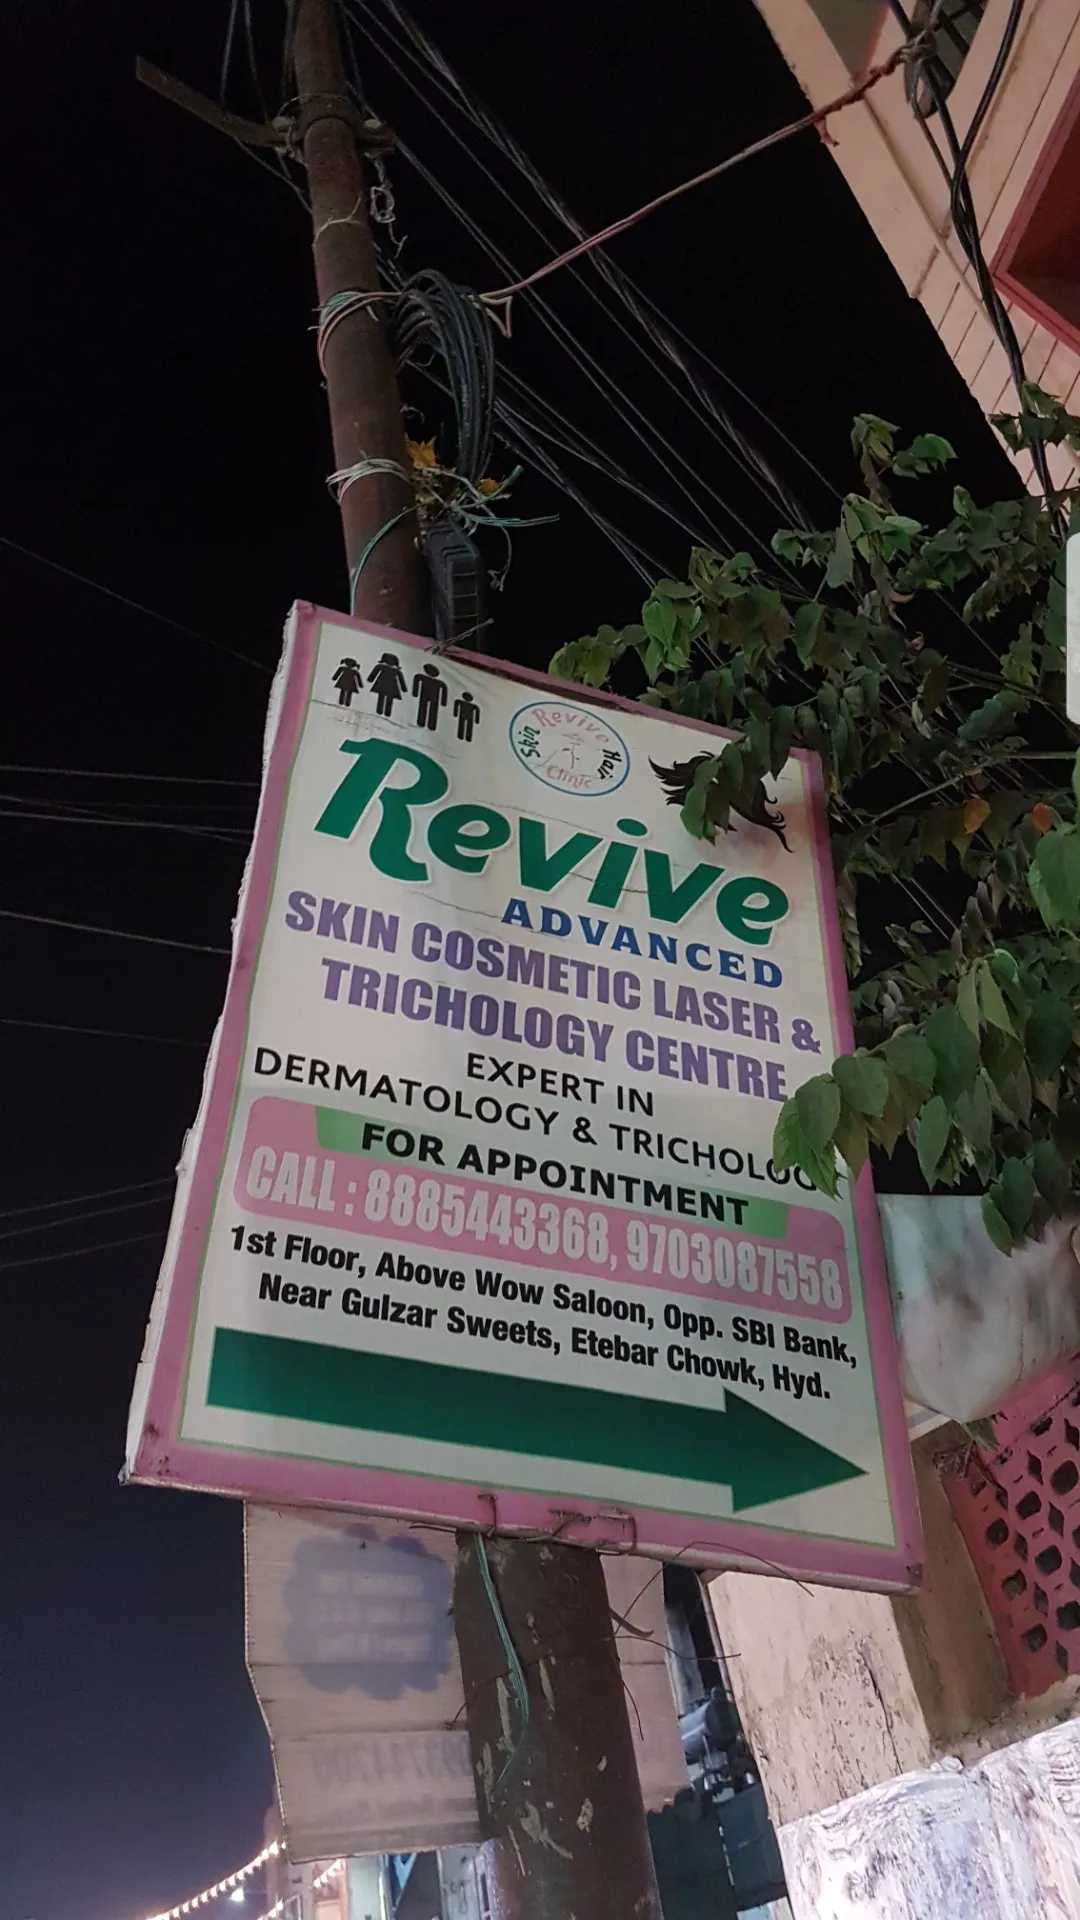 Revive Skin & Hair Clinic(Vidyaranyapura) in Vidyaranyapura, Bangalore -  Book Appointment, View Contact Number, Feedbacks, Address | Dr. Srinivas C